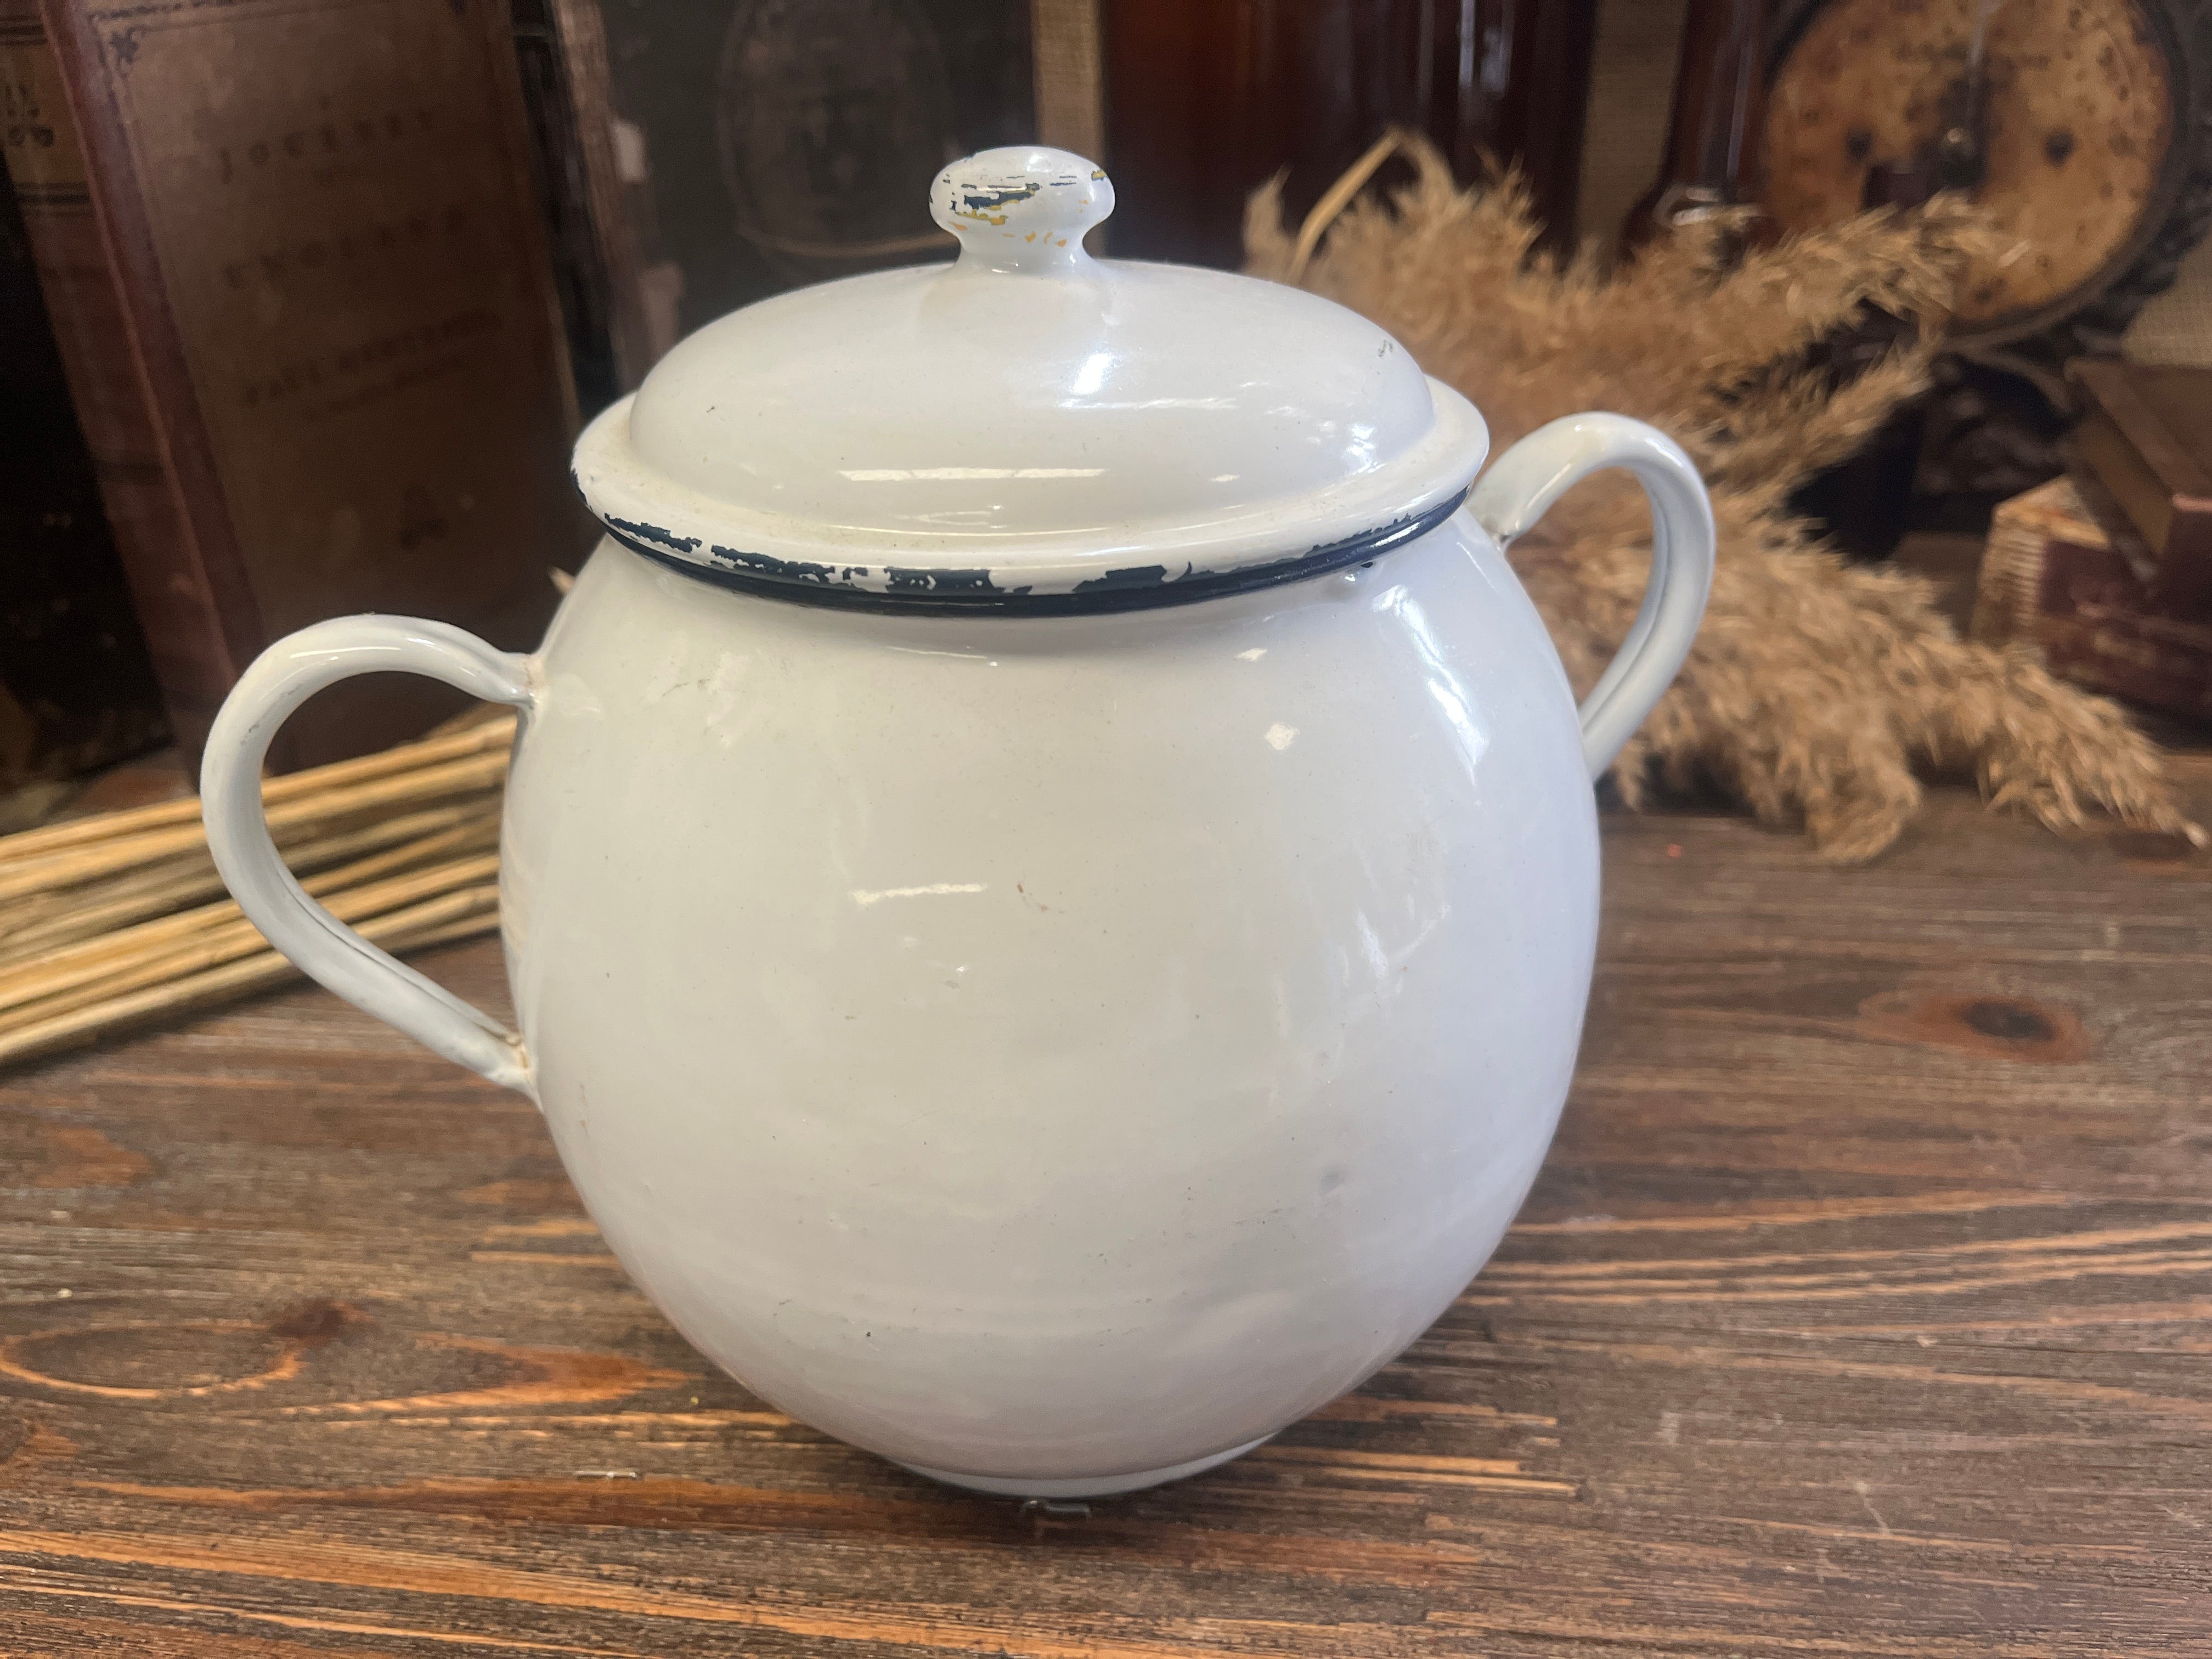 Vintage Enamel pot with Handles